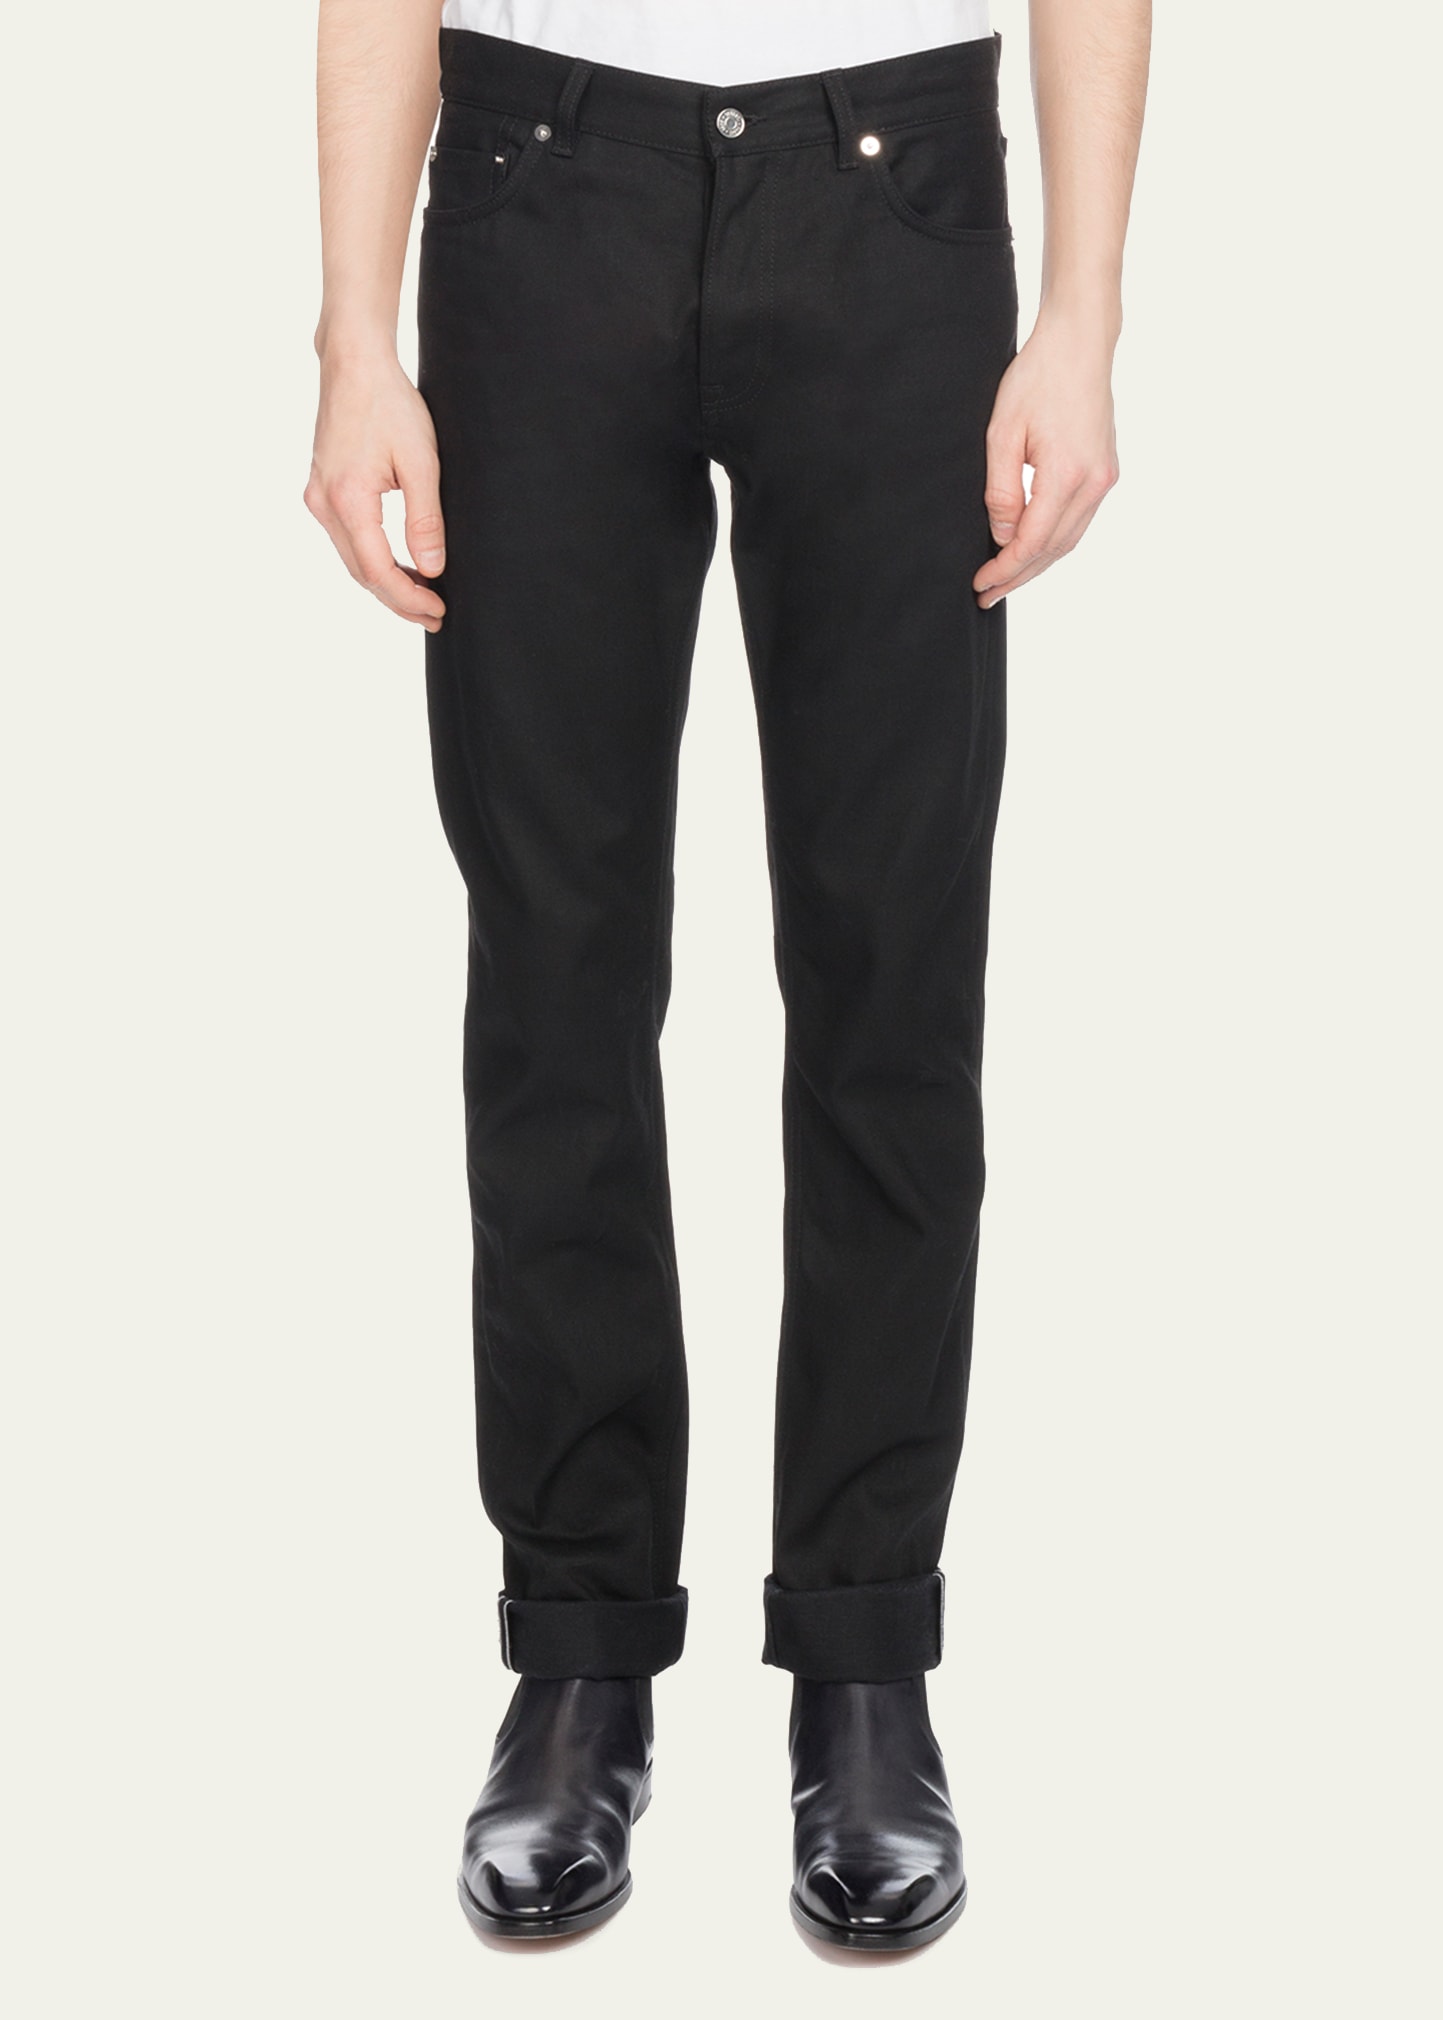 Berluti Men's Straight-Leg Cotton Jeans, Black